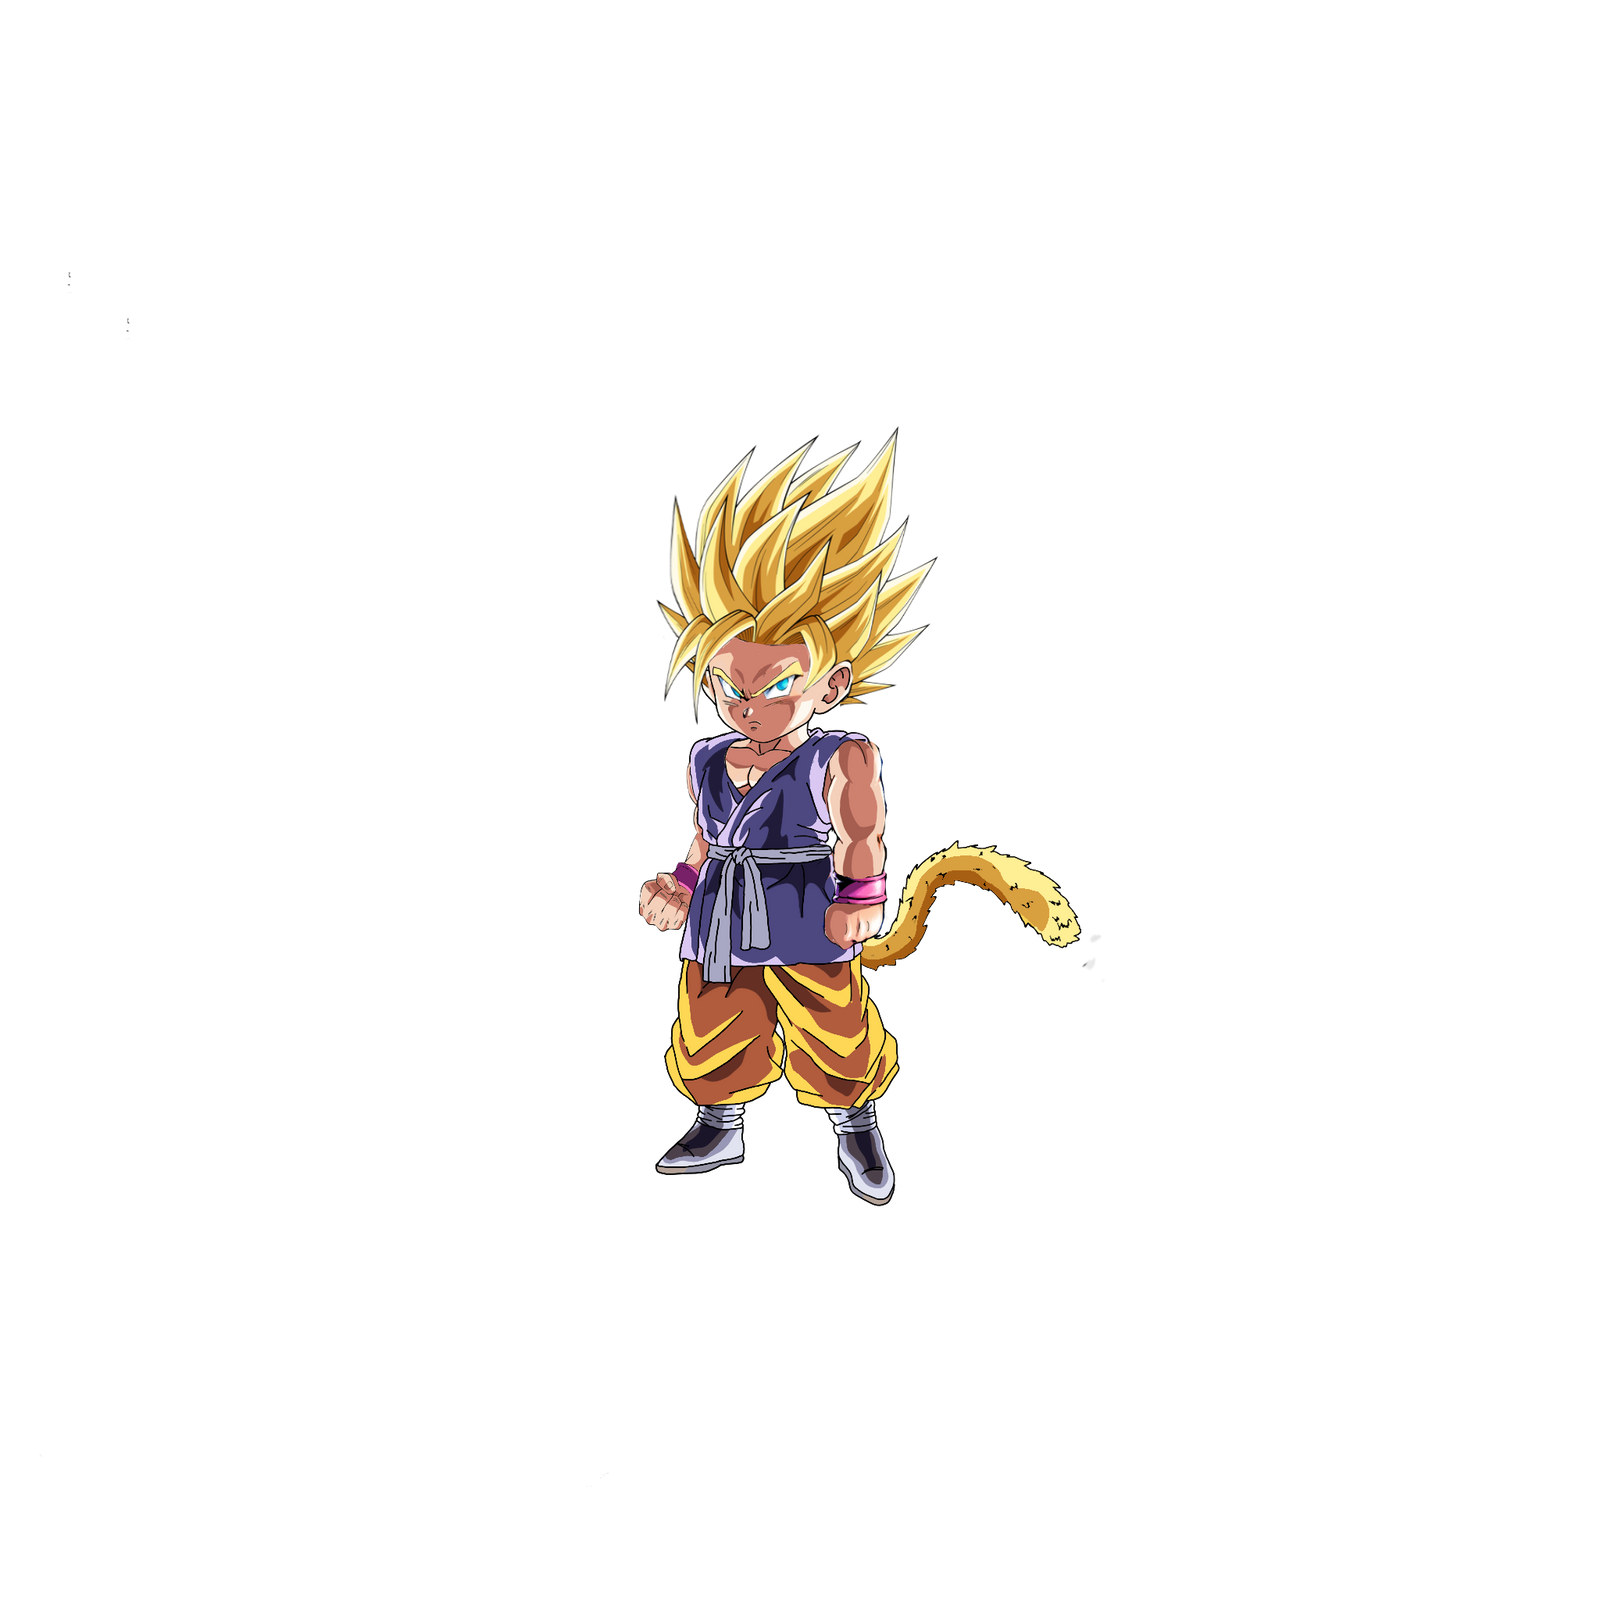 Super Saiyan 2 Goku (GT) by AbsolutelyYOSHAAA on DeviantArt